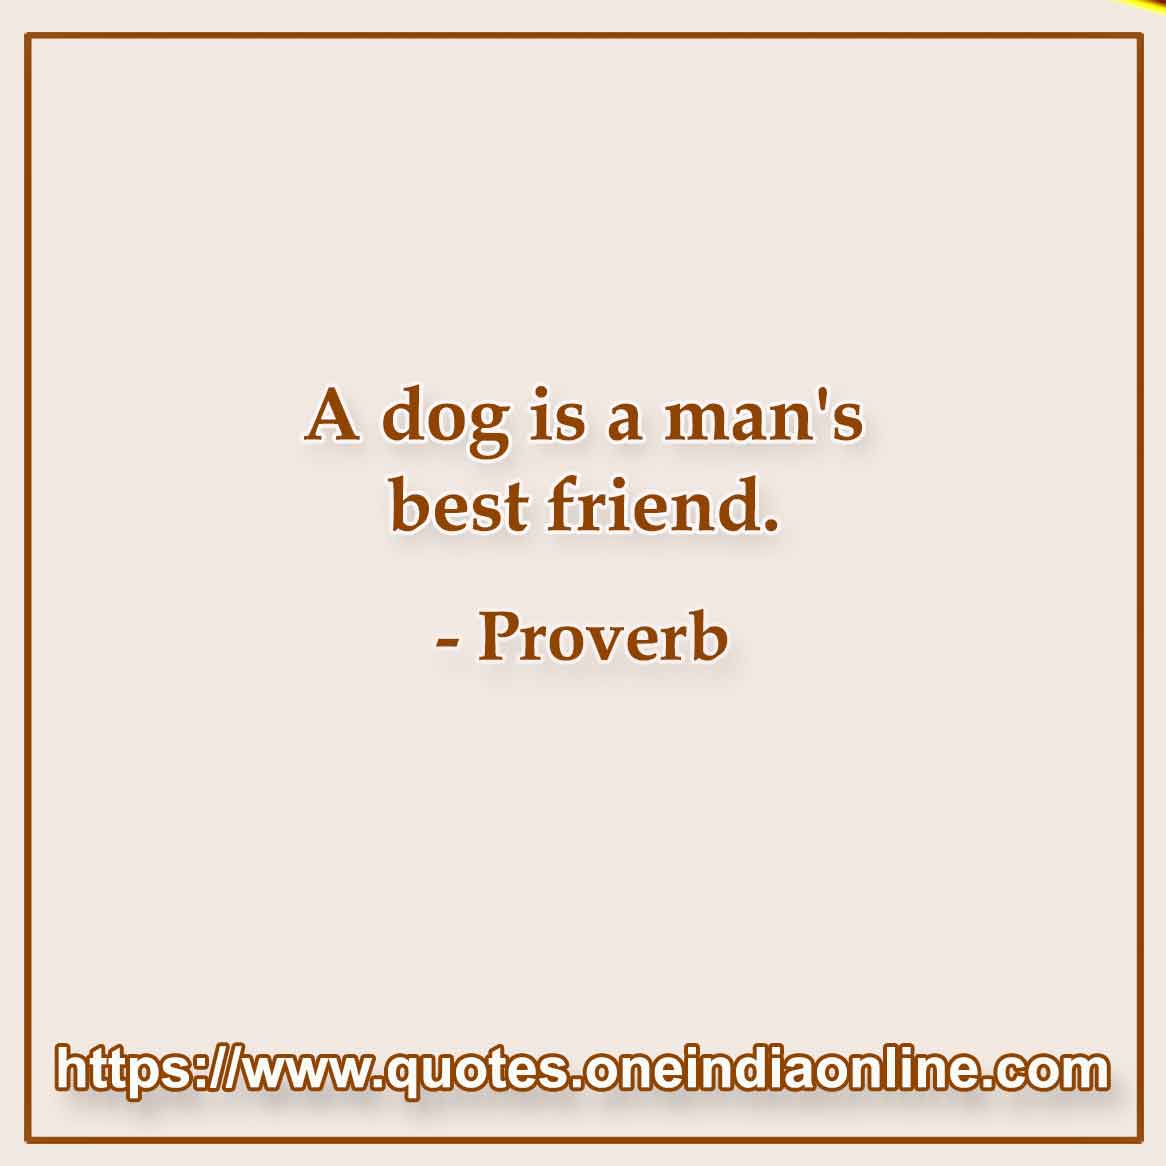 A dog is a man's best friend.

- 